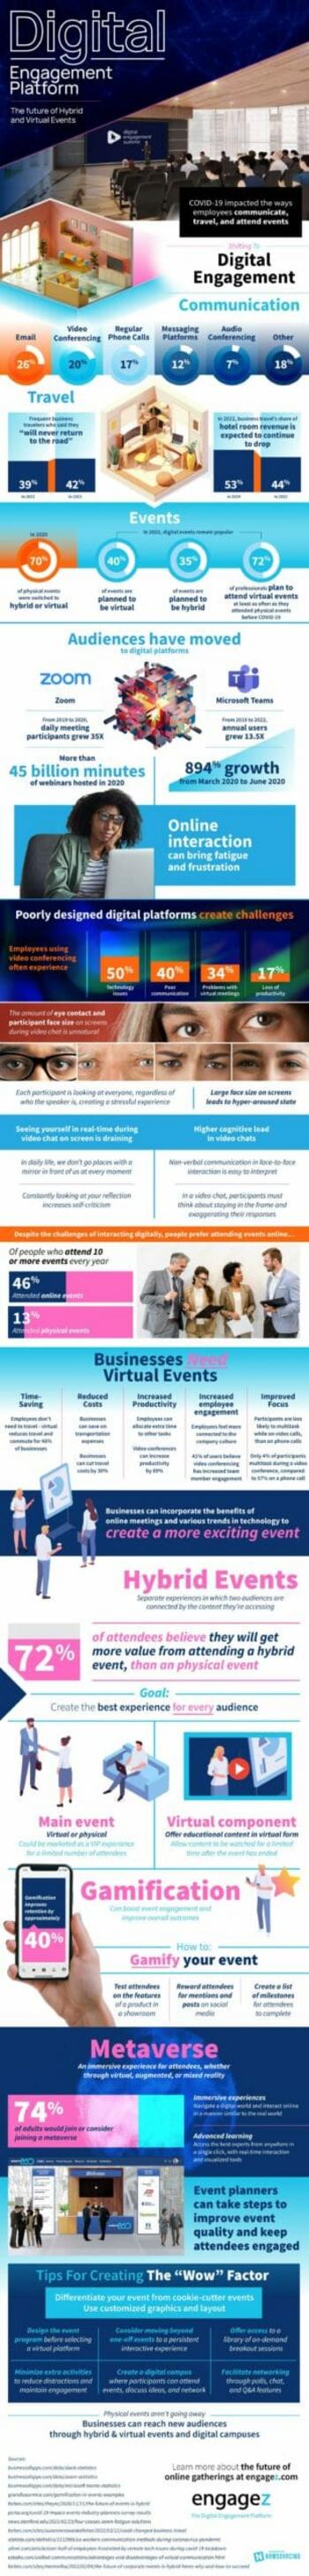 Digital Engagement With Virtual Events: https://www.valuewalk.com/wp-content/uploads/2022/10/Digital-Engagement-With-Virtual-Events-IG-scaled.jpg